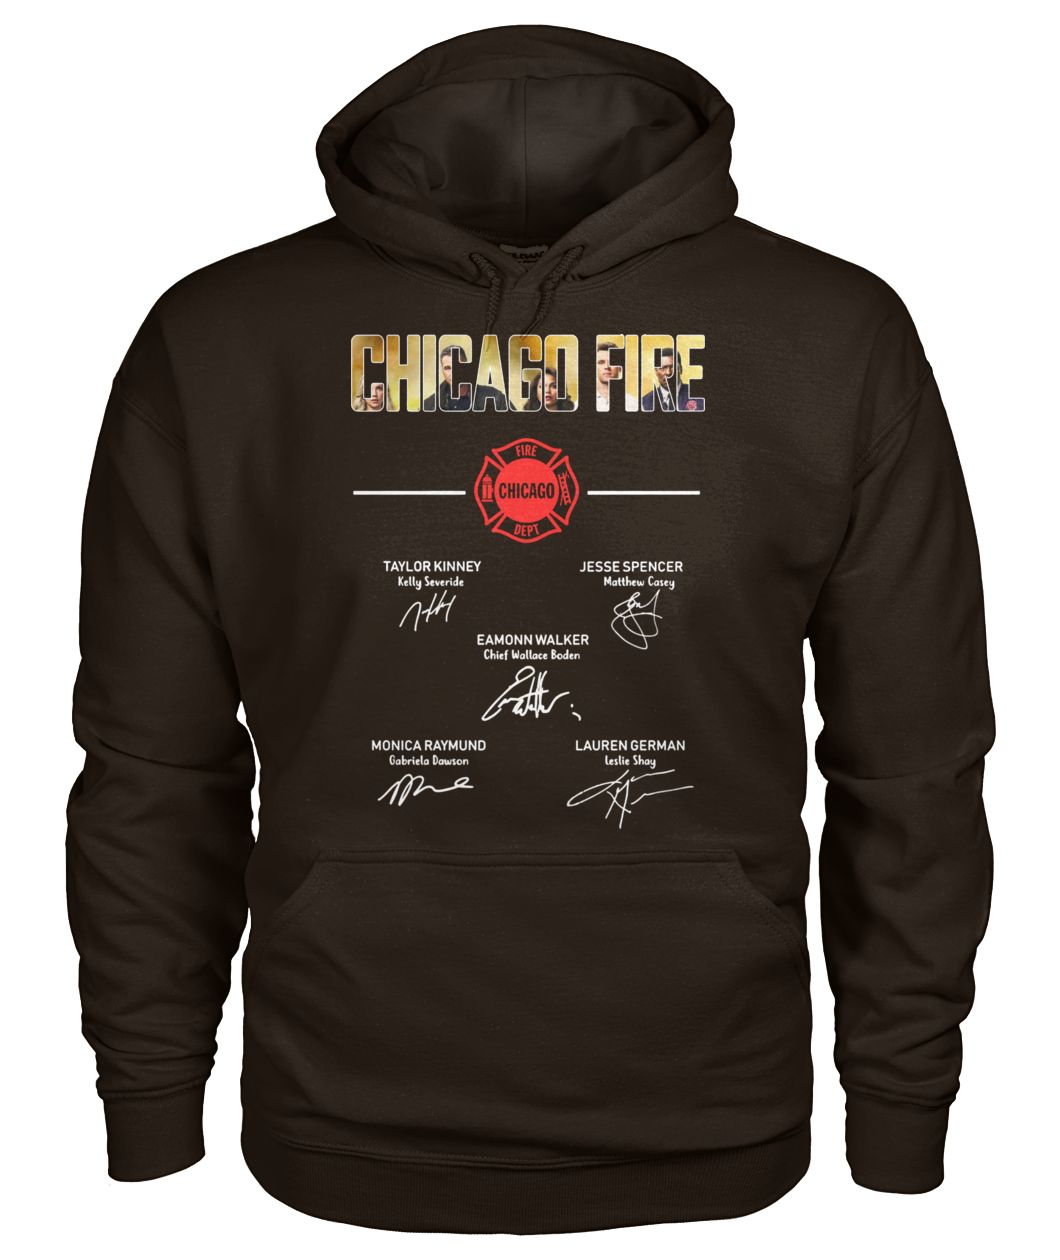 Chicago fire signatures gildan hoodie